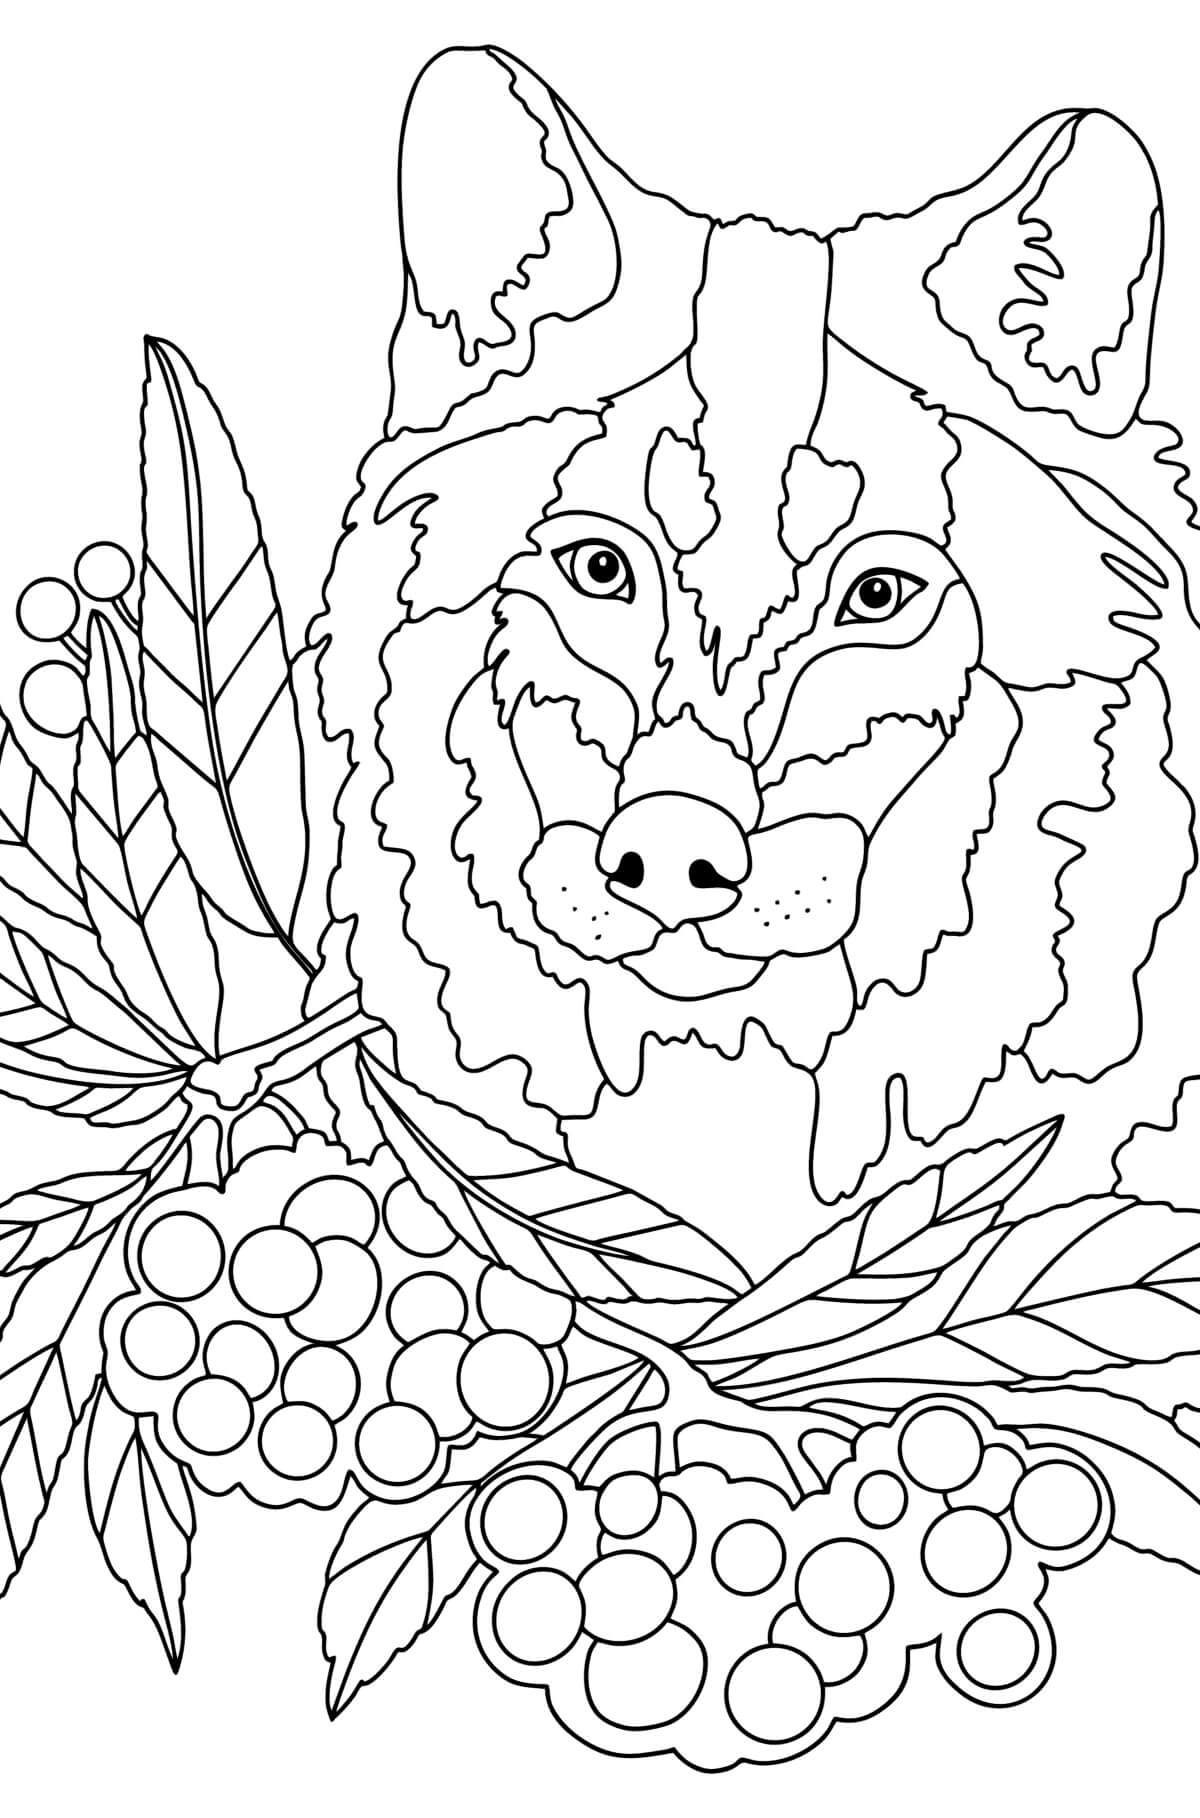 Mandala Wolf Coloring Page – Sheet 9 Mandala